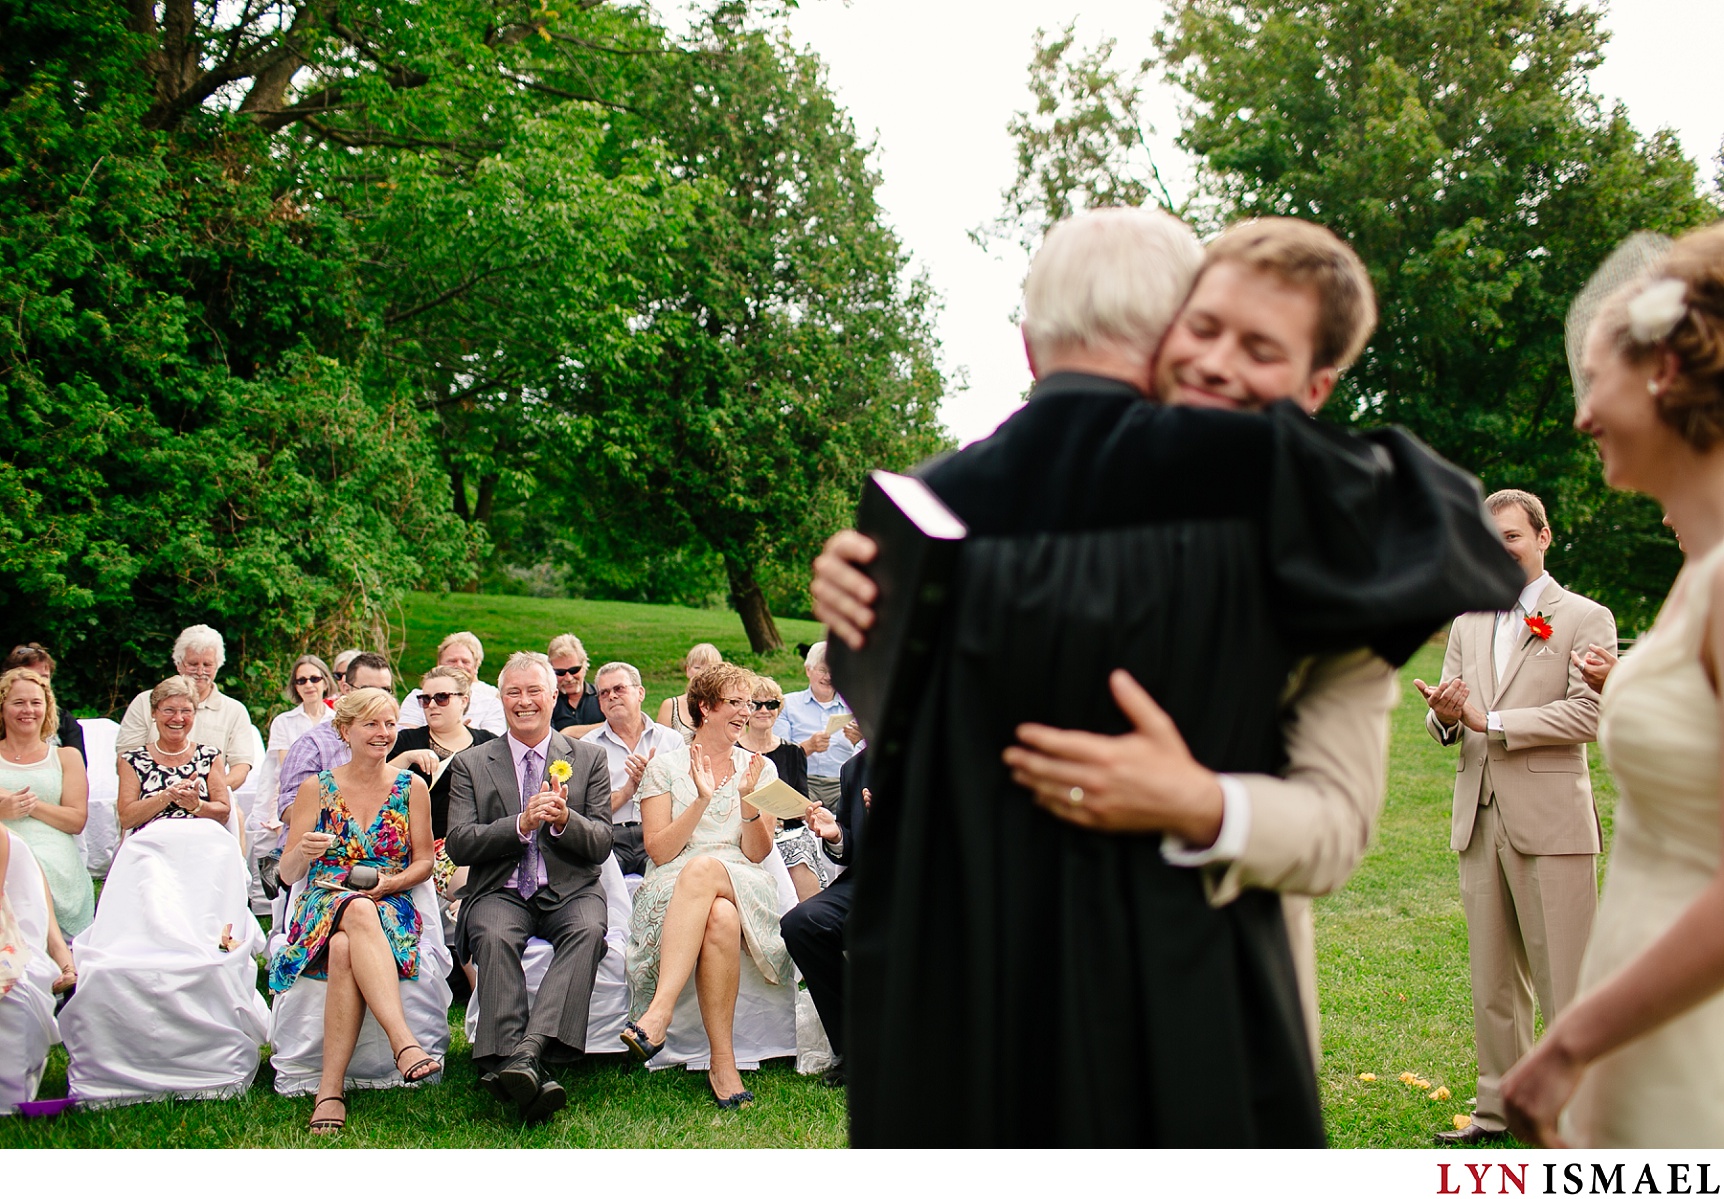 The bride's grandfather hugs her groom.